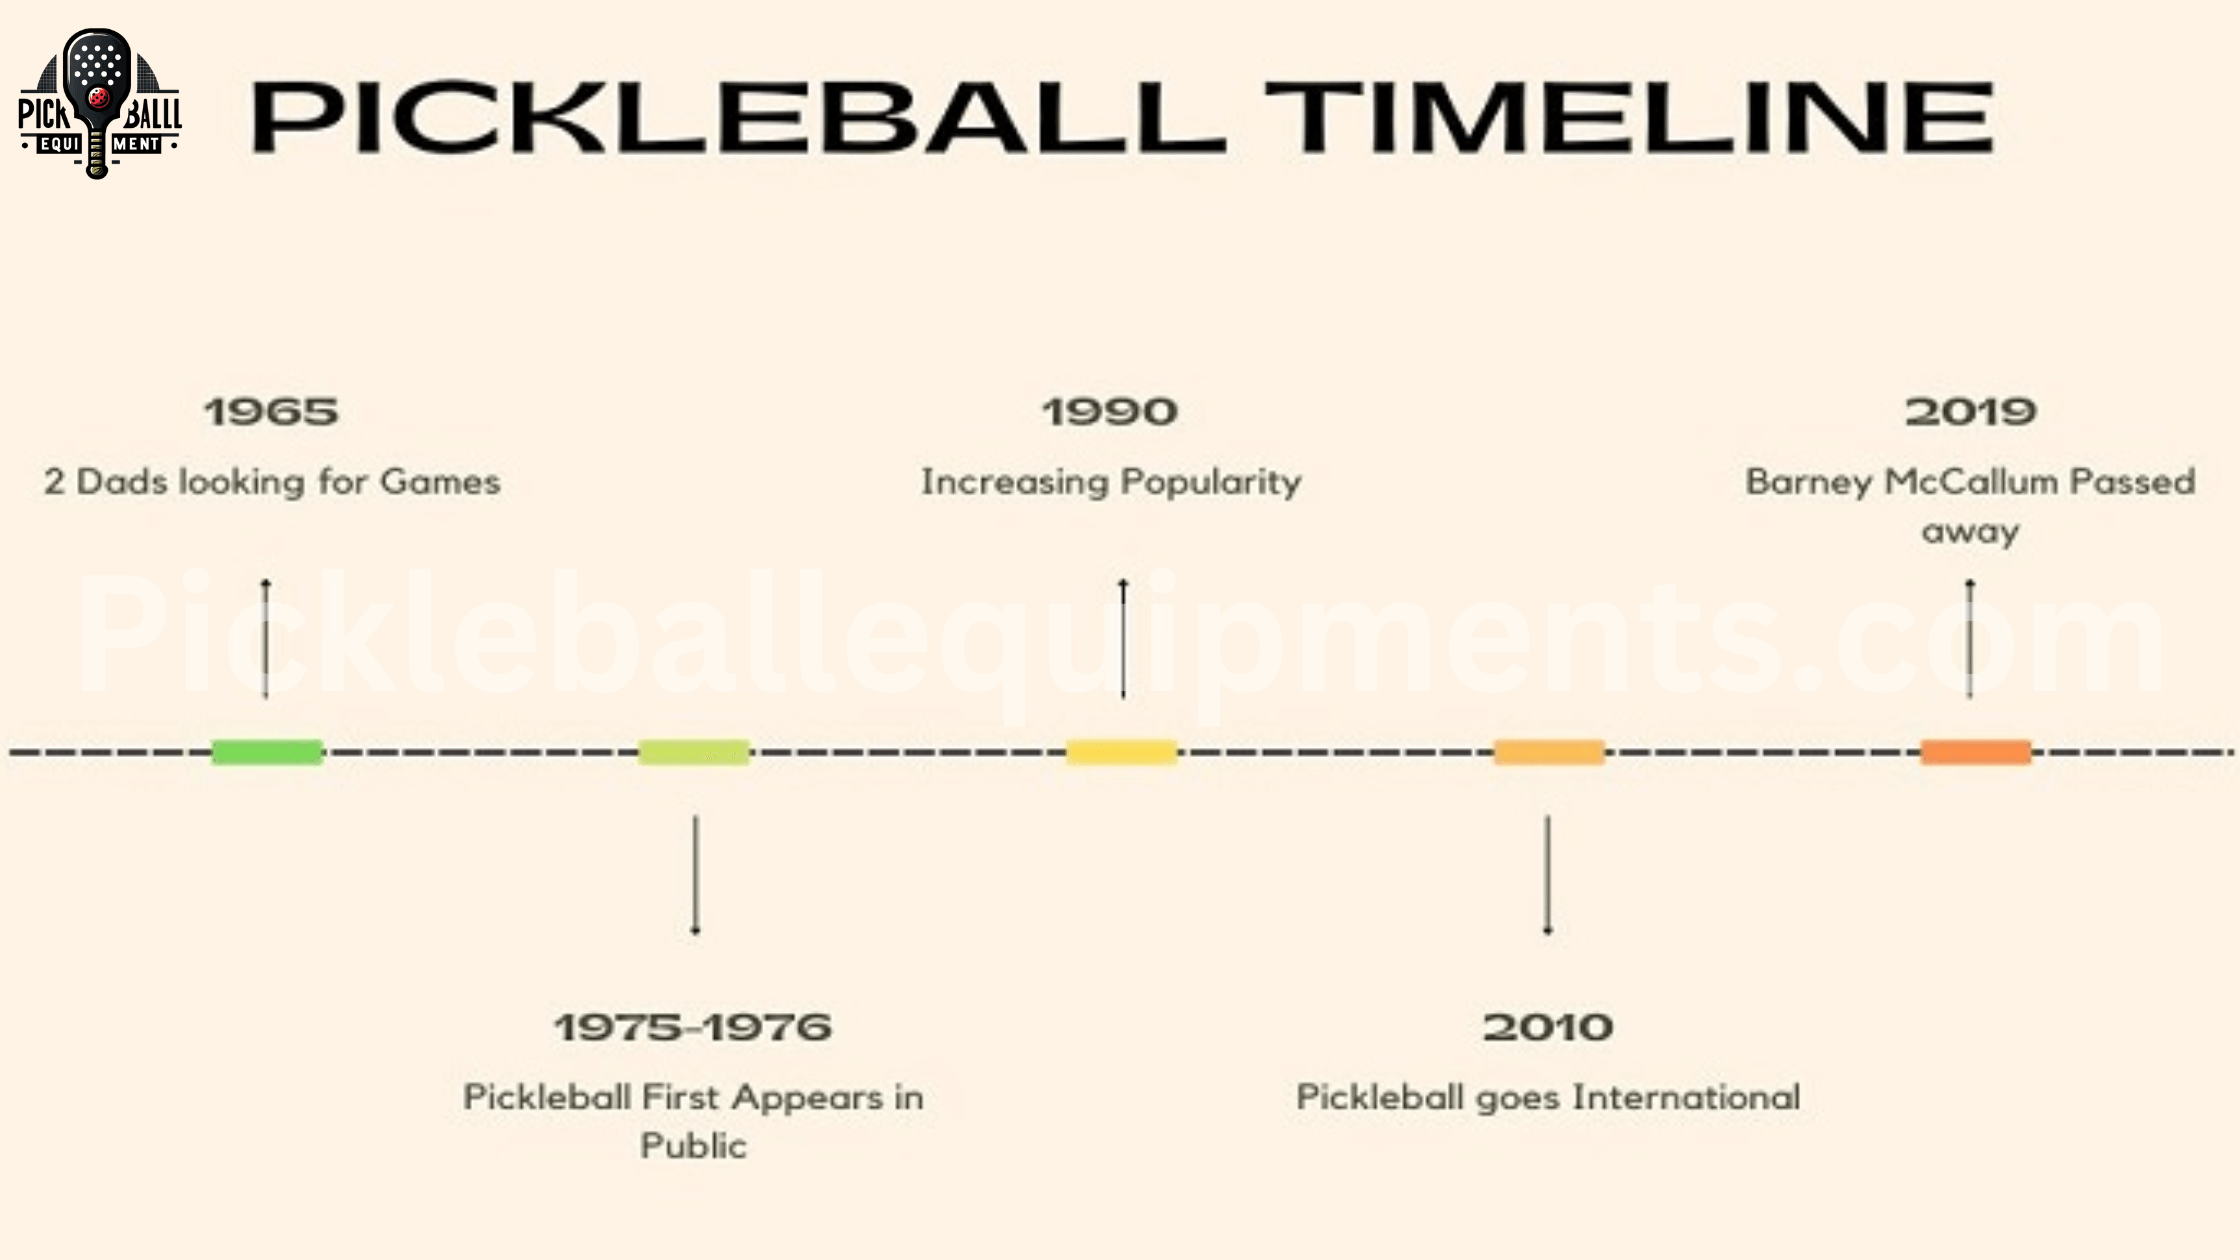 The Pickleball Timeline